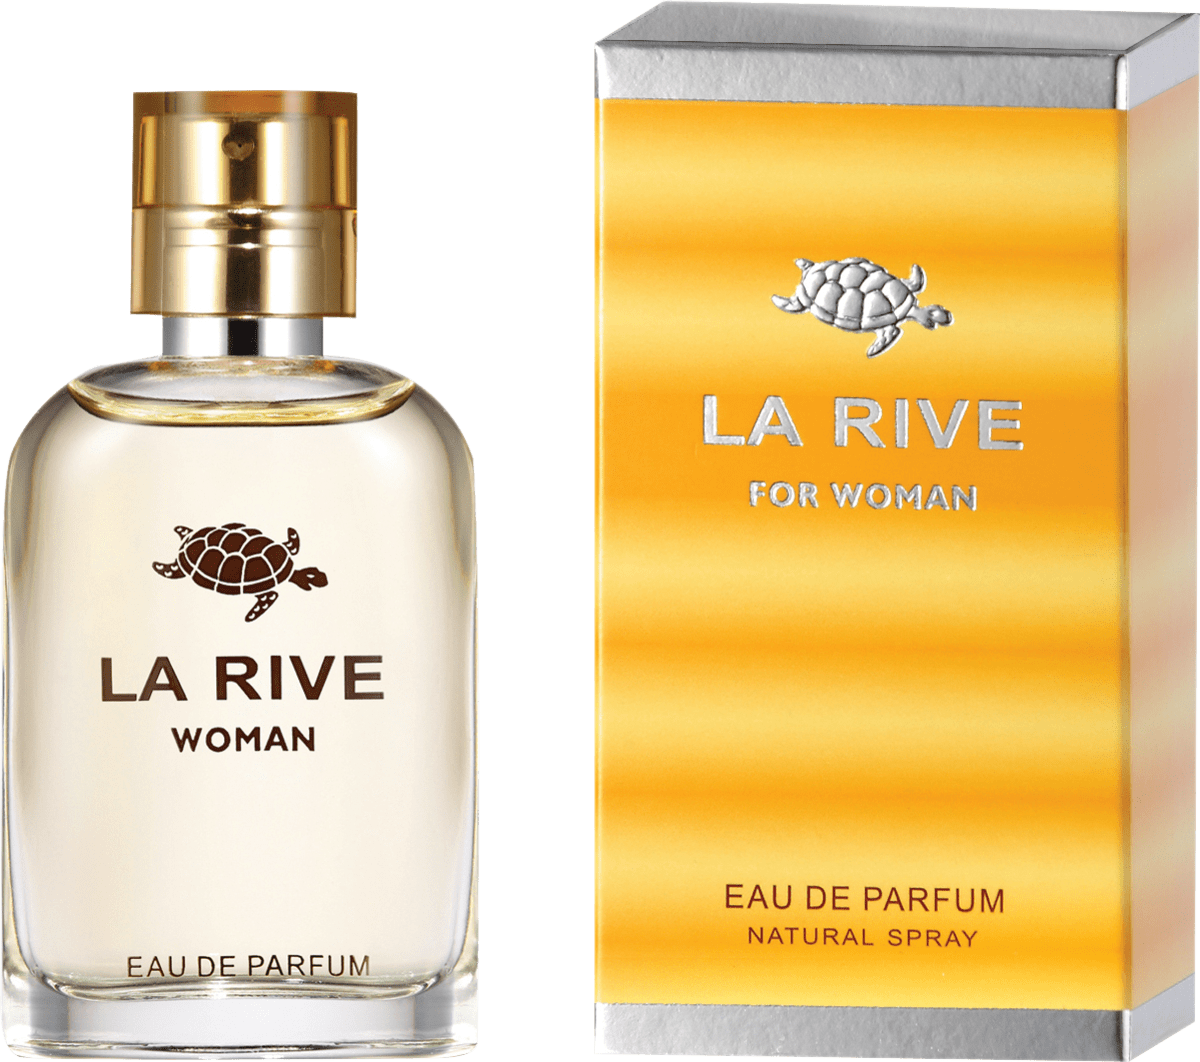 La Rive парфюмерная вода. Духи la Rive woman. La Rive woman парфюмерная вода жен. 90 Мл. La Rive парфюмерная вода мужская. Купить духи ла